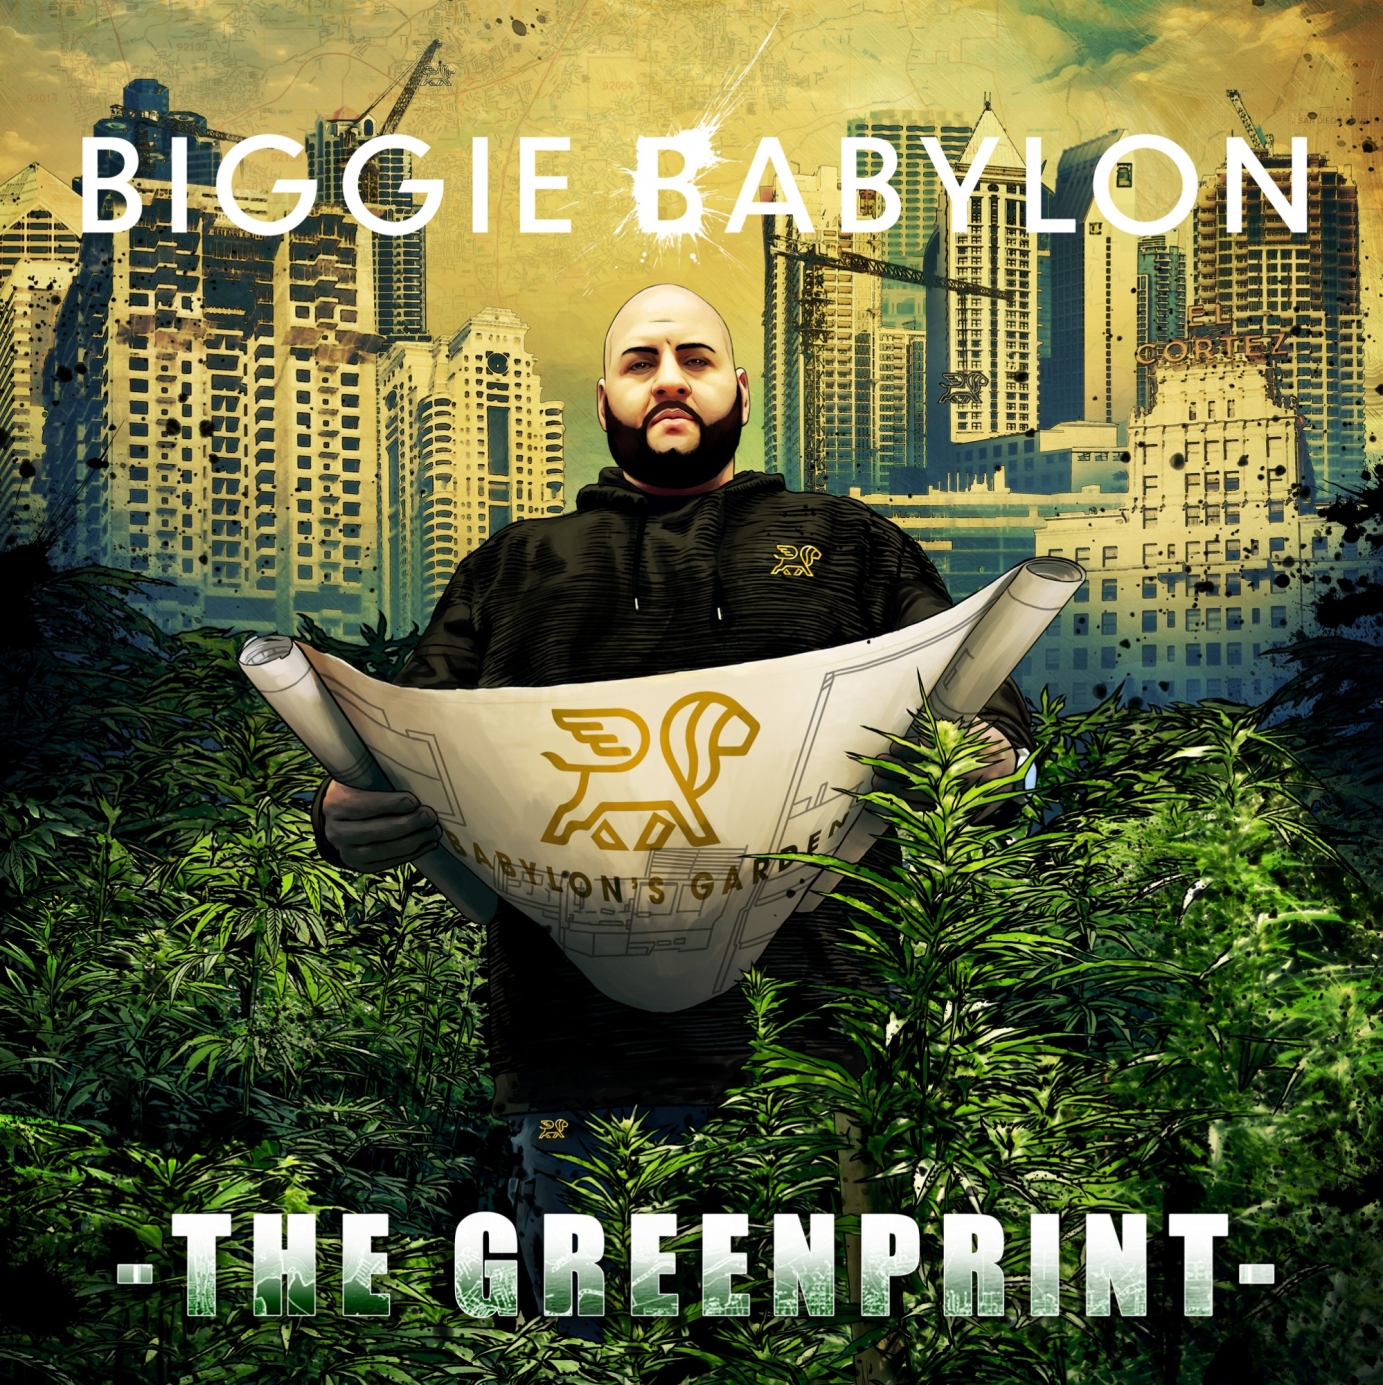 Biggie Babylon Album and Poster Art